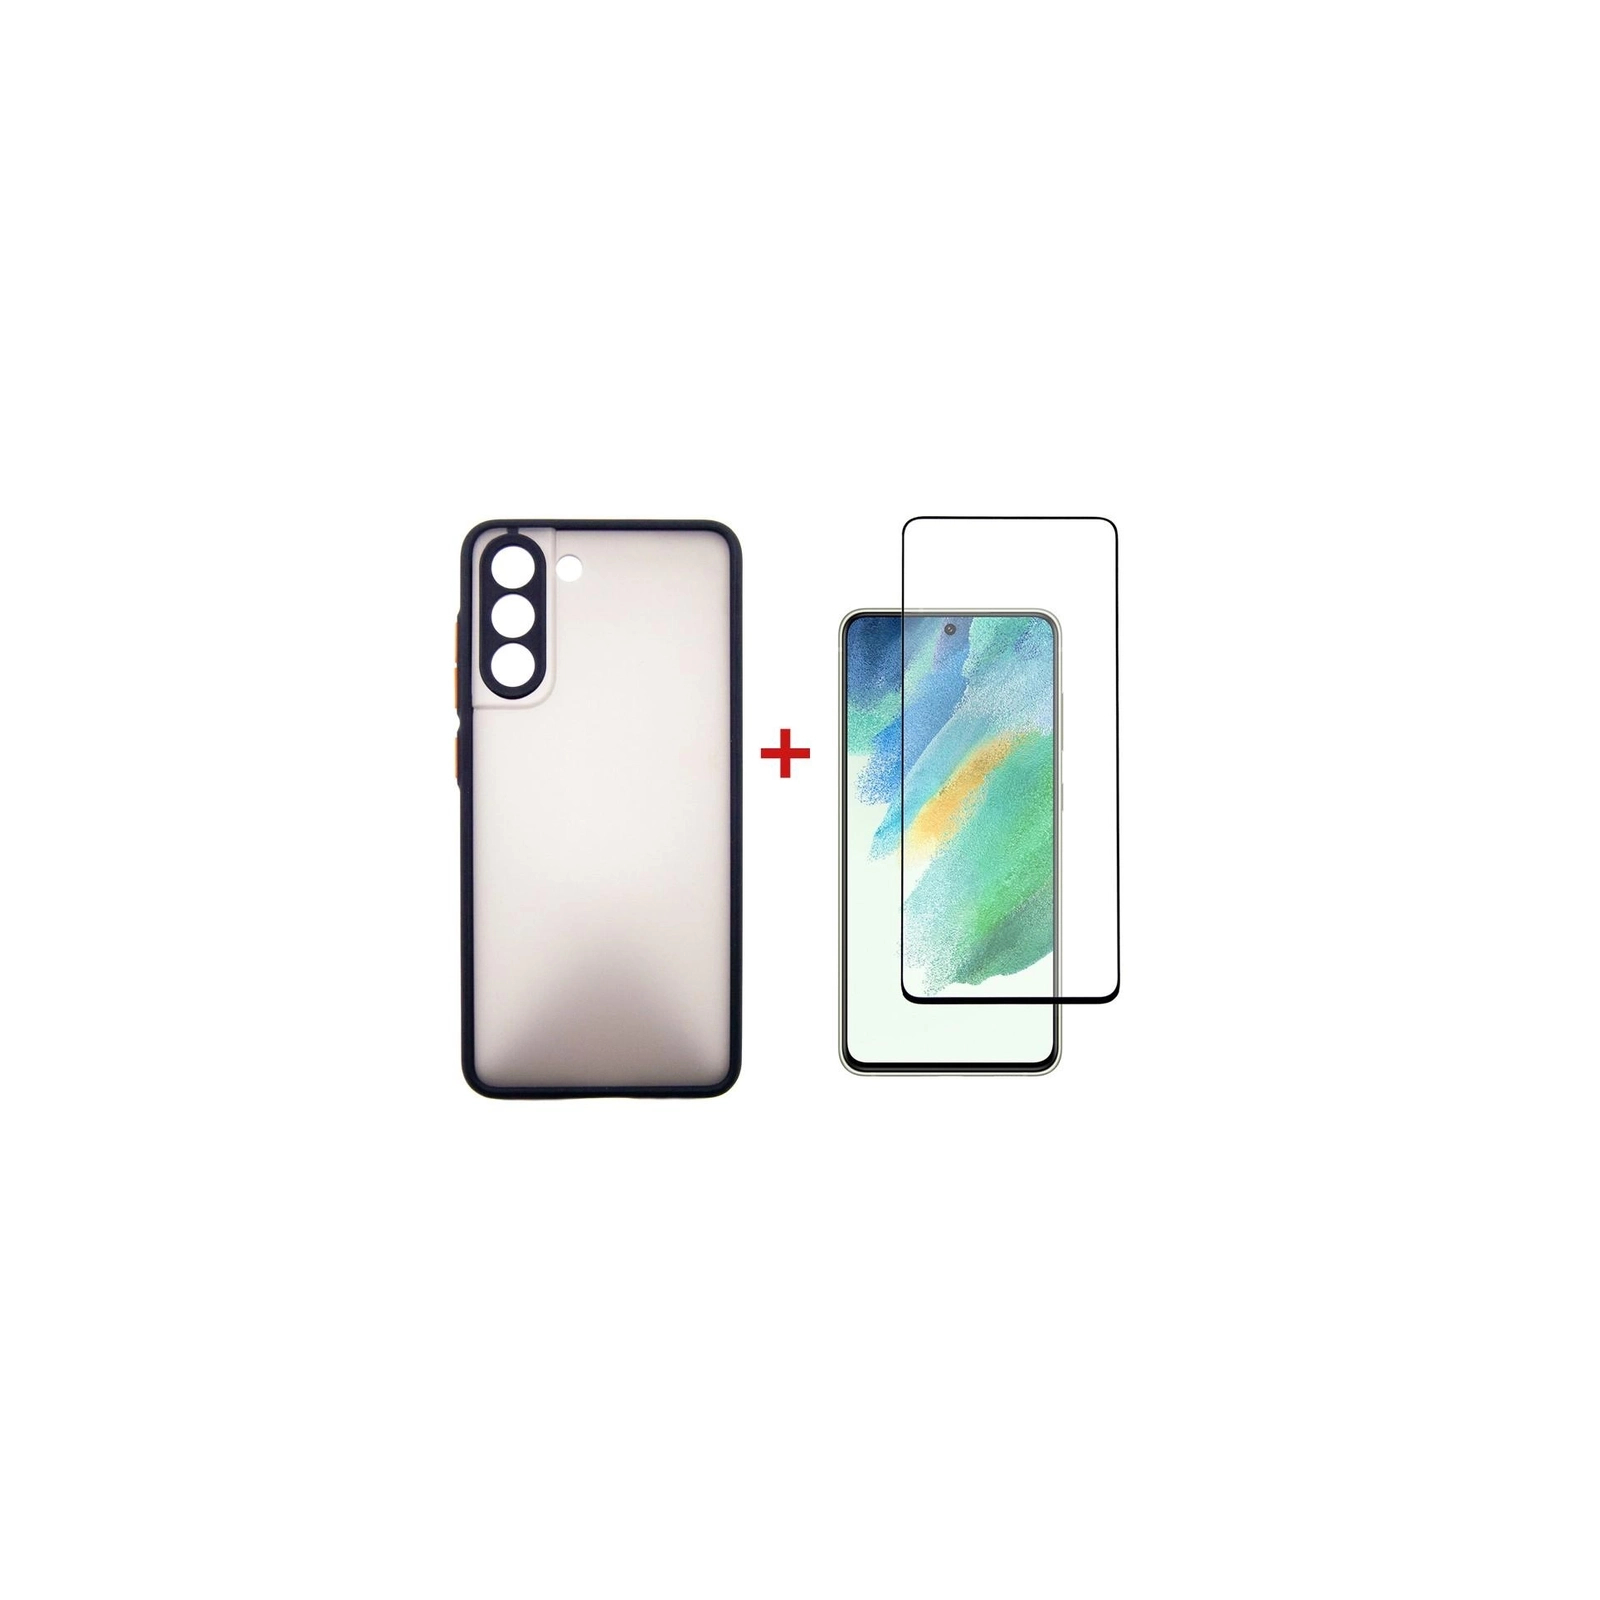 Чехол для мобильного телефона Dengos Kit for Samsung Galaxy S21 FE case + glass (Purple) (DG-KM-40)